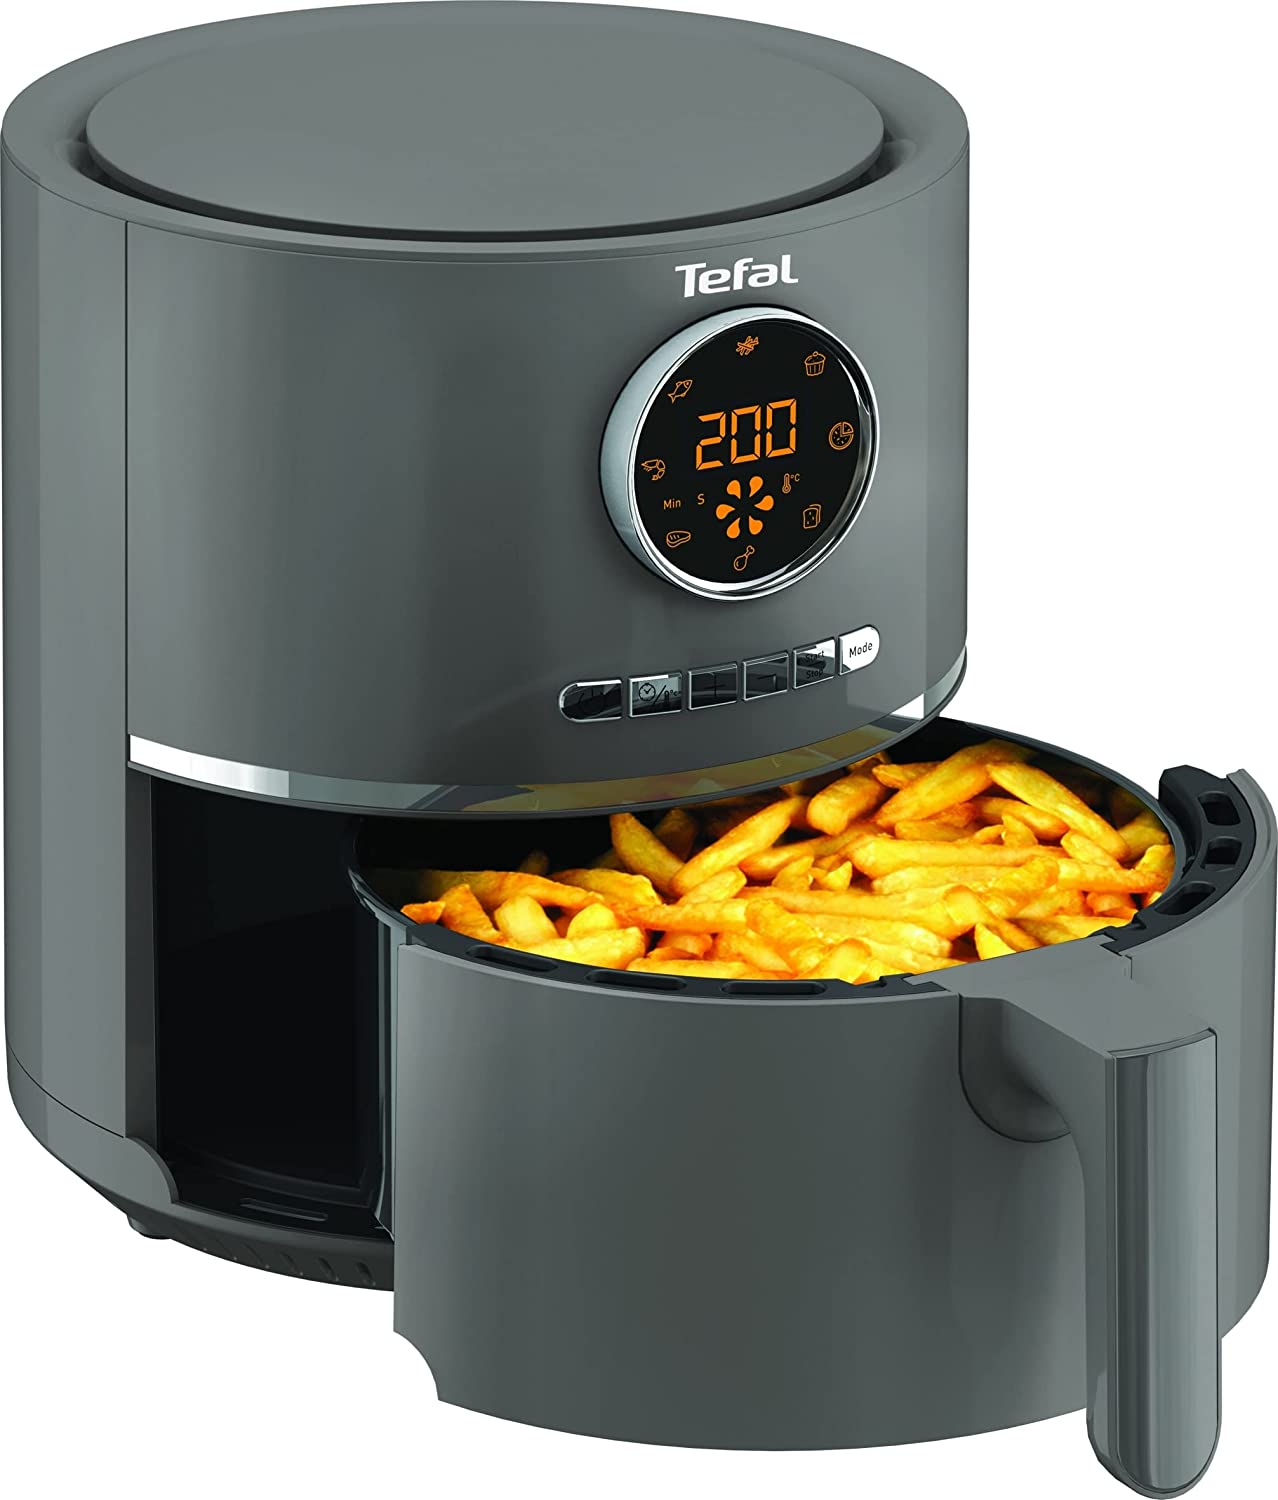 Tefal EY111B Airfry Ultra Digital Hot Air Fryer | 4 Cooking Options (Frying, Roasting, Grilling, Baking) | Capacity 1.2 kg | Adjustable Temperature | Timer | Grey